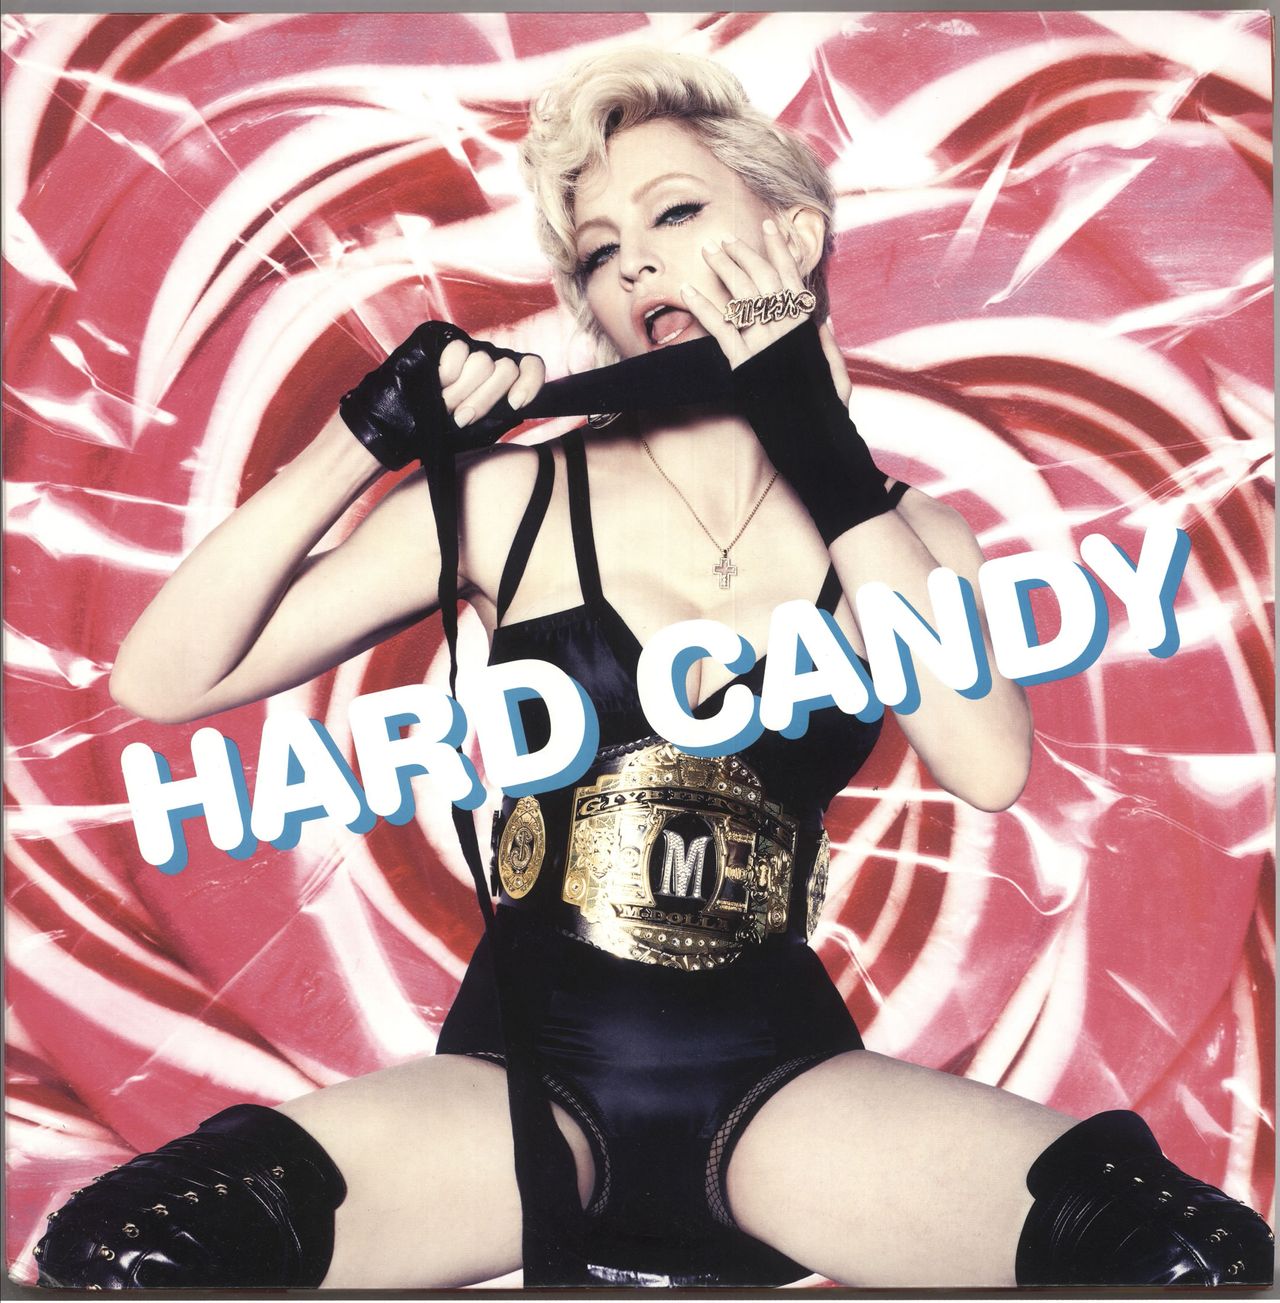 Madonna HARD CANDY CD) US盤 (2LP 12inch - 通販 - dp24077948.lolipop.jp